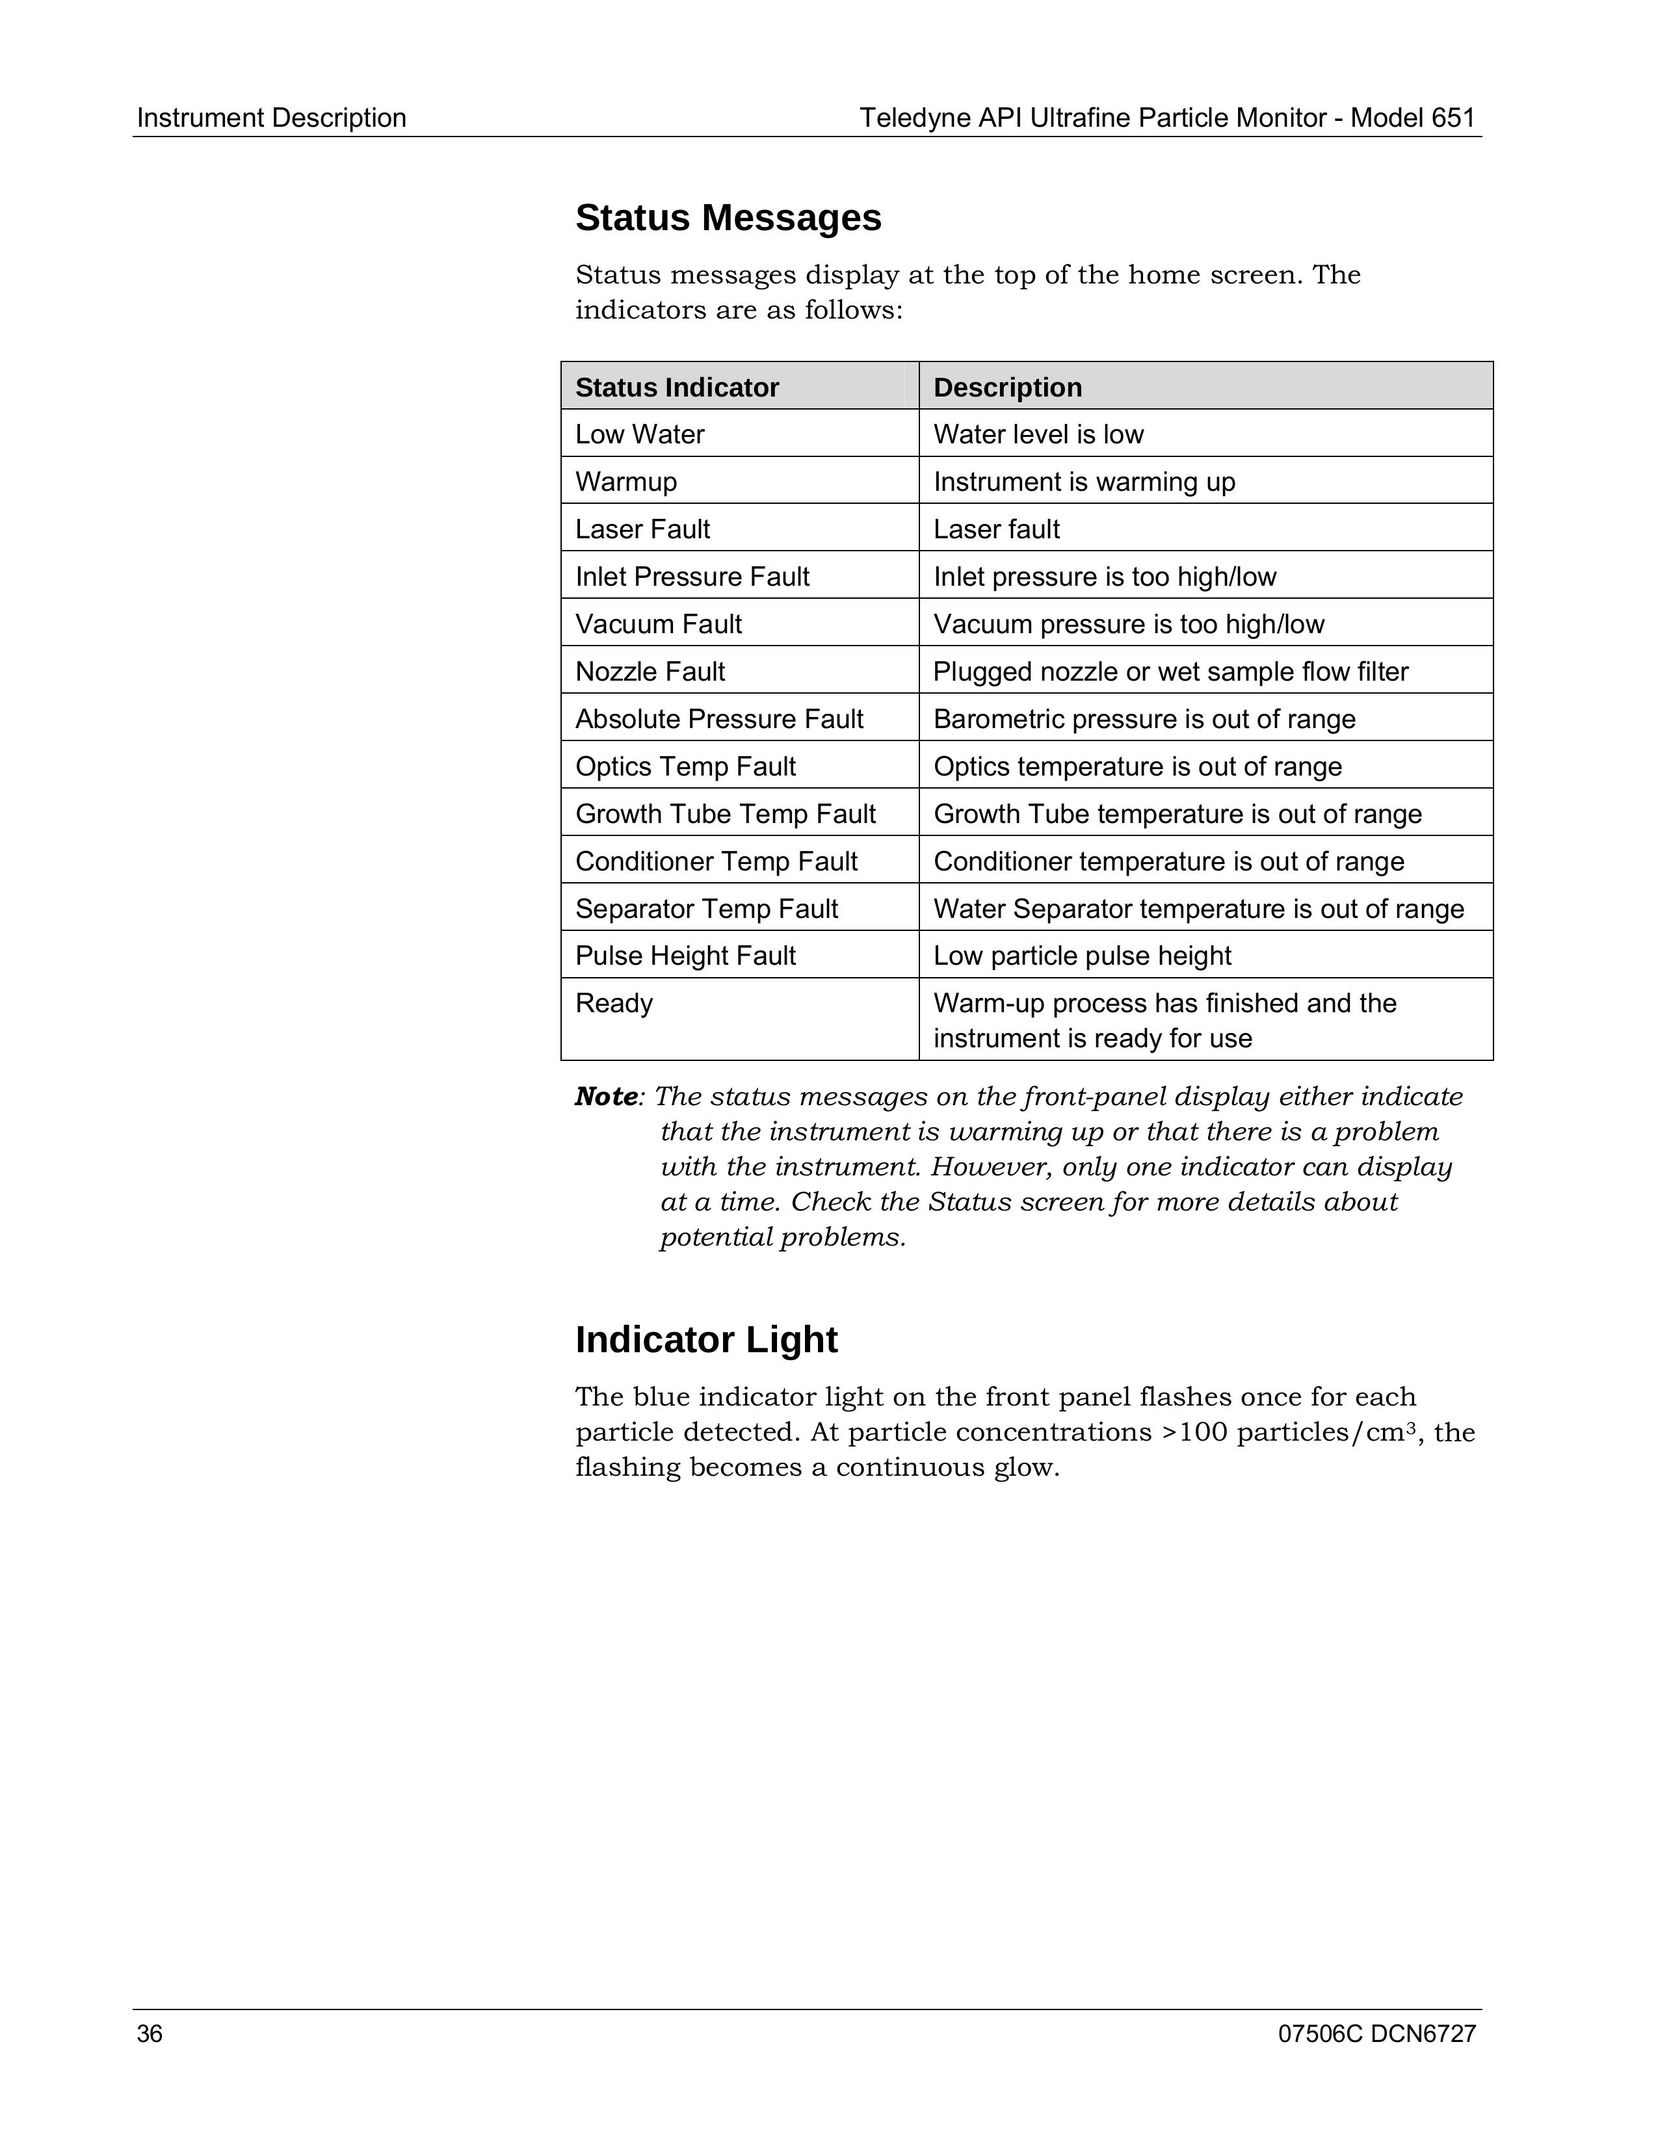 Teledyne 651 Computer Monitor User Manual (Page 38)